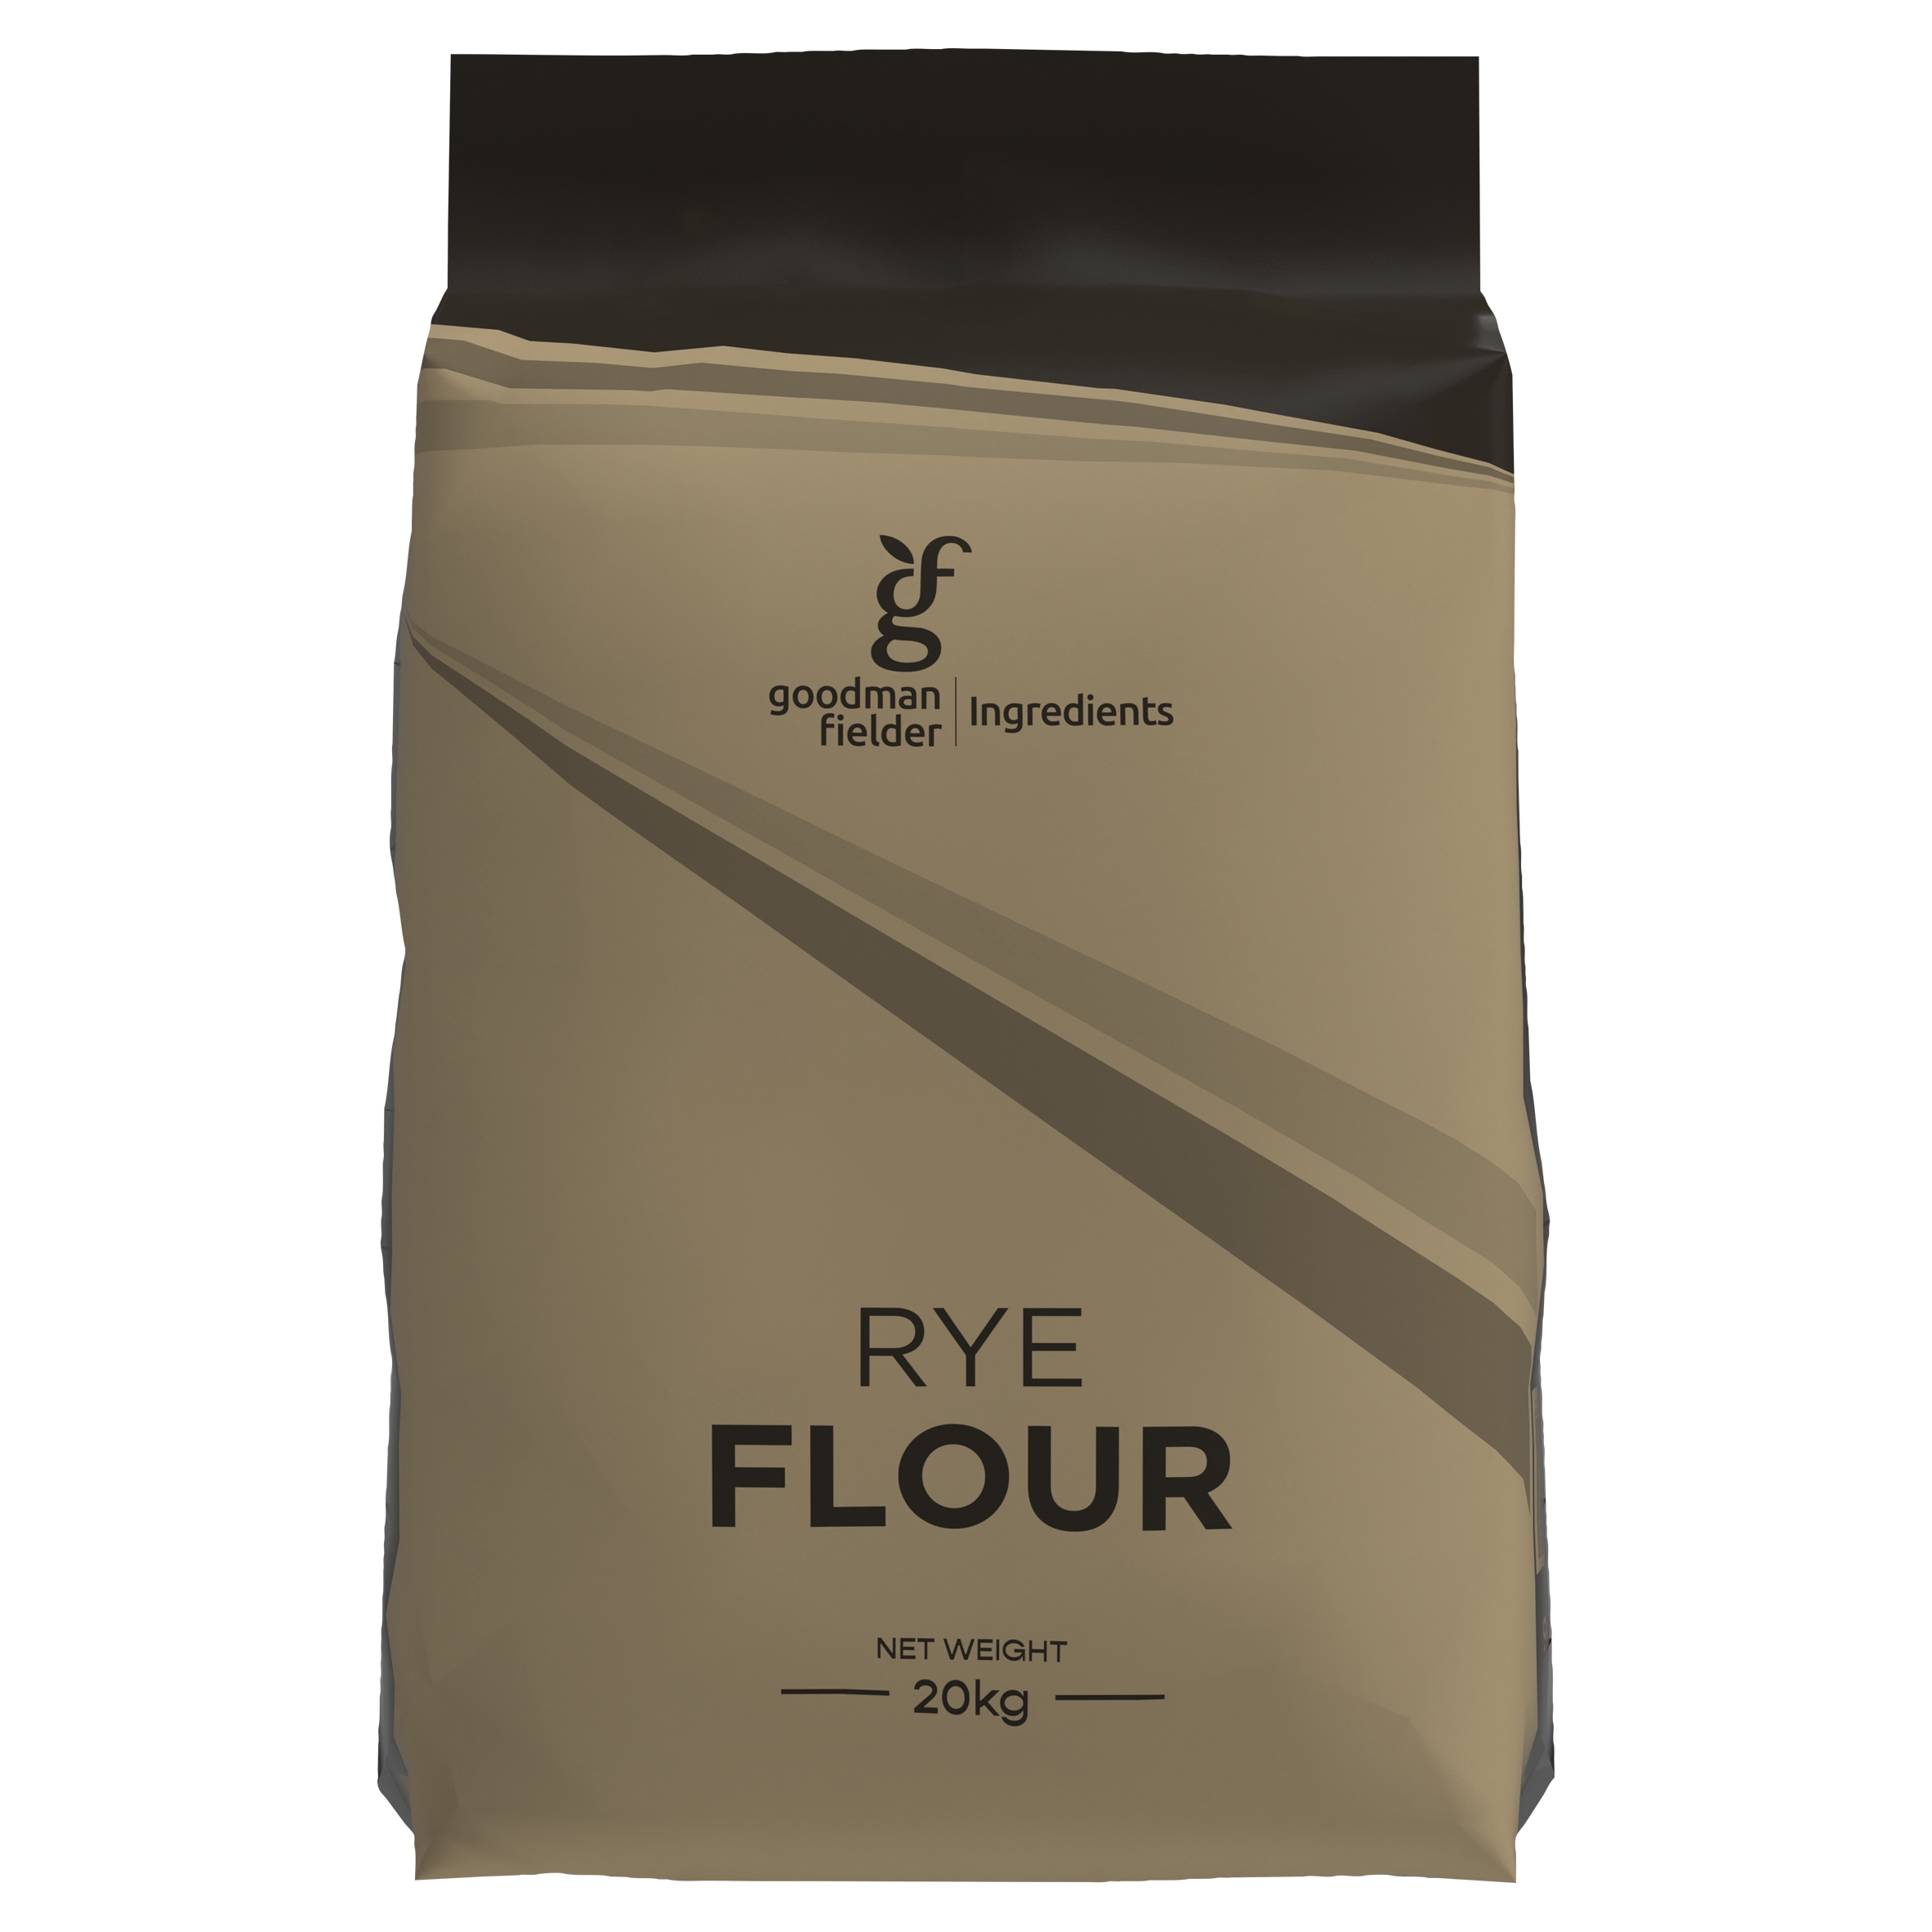 Goodman Fielder Ingredients Rye Flour 20kg product photo